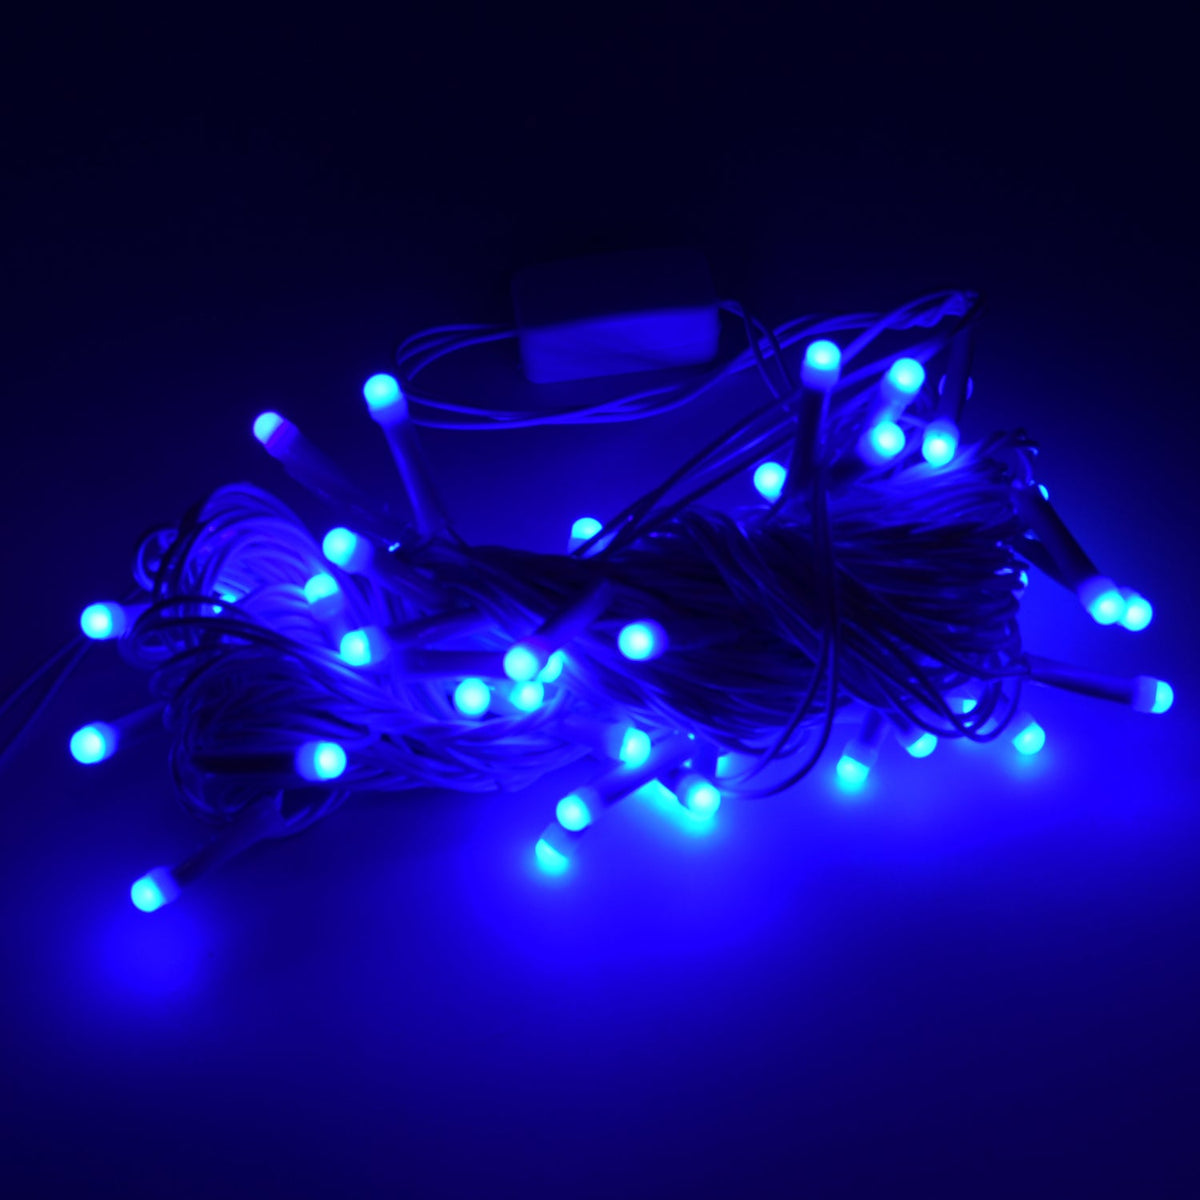 8351 9MTR HOME DECORATION DIWALI & WEDDING LED CHRISTMAS STRING LIGHT INDOOR AND OUTDOOR LIGHT ,FESTIVAL DECORATION LED STRING LIGHT, ONE COLOR LIGHT ( 9 MTR Blue Color)